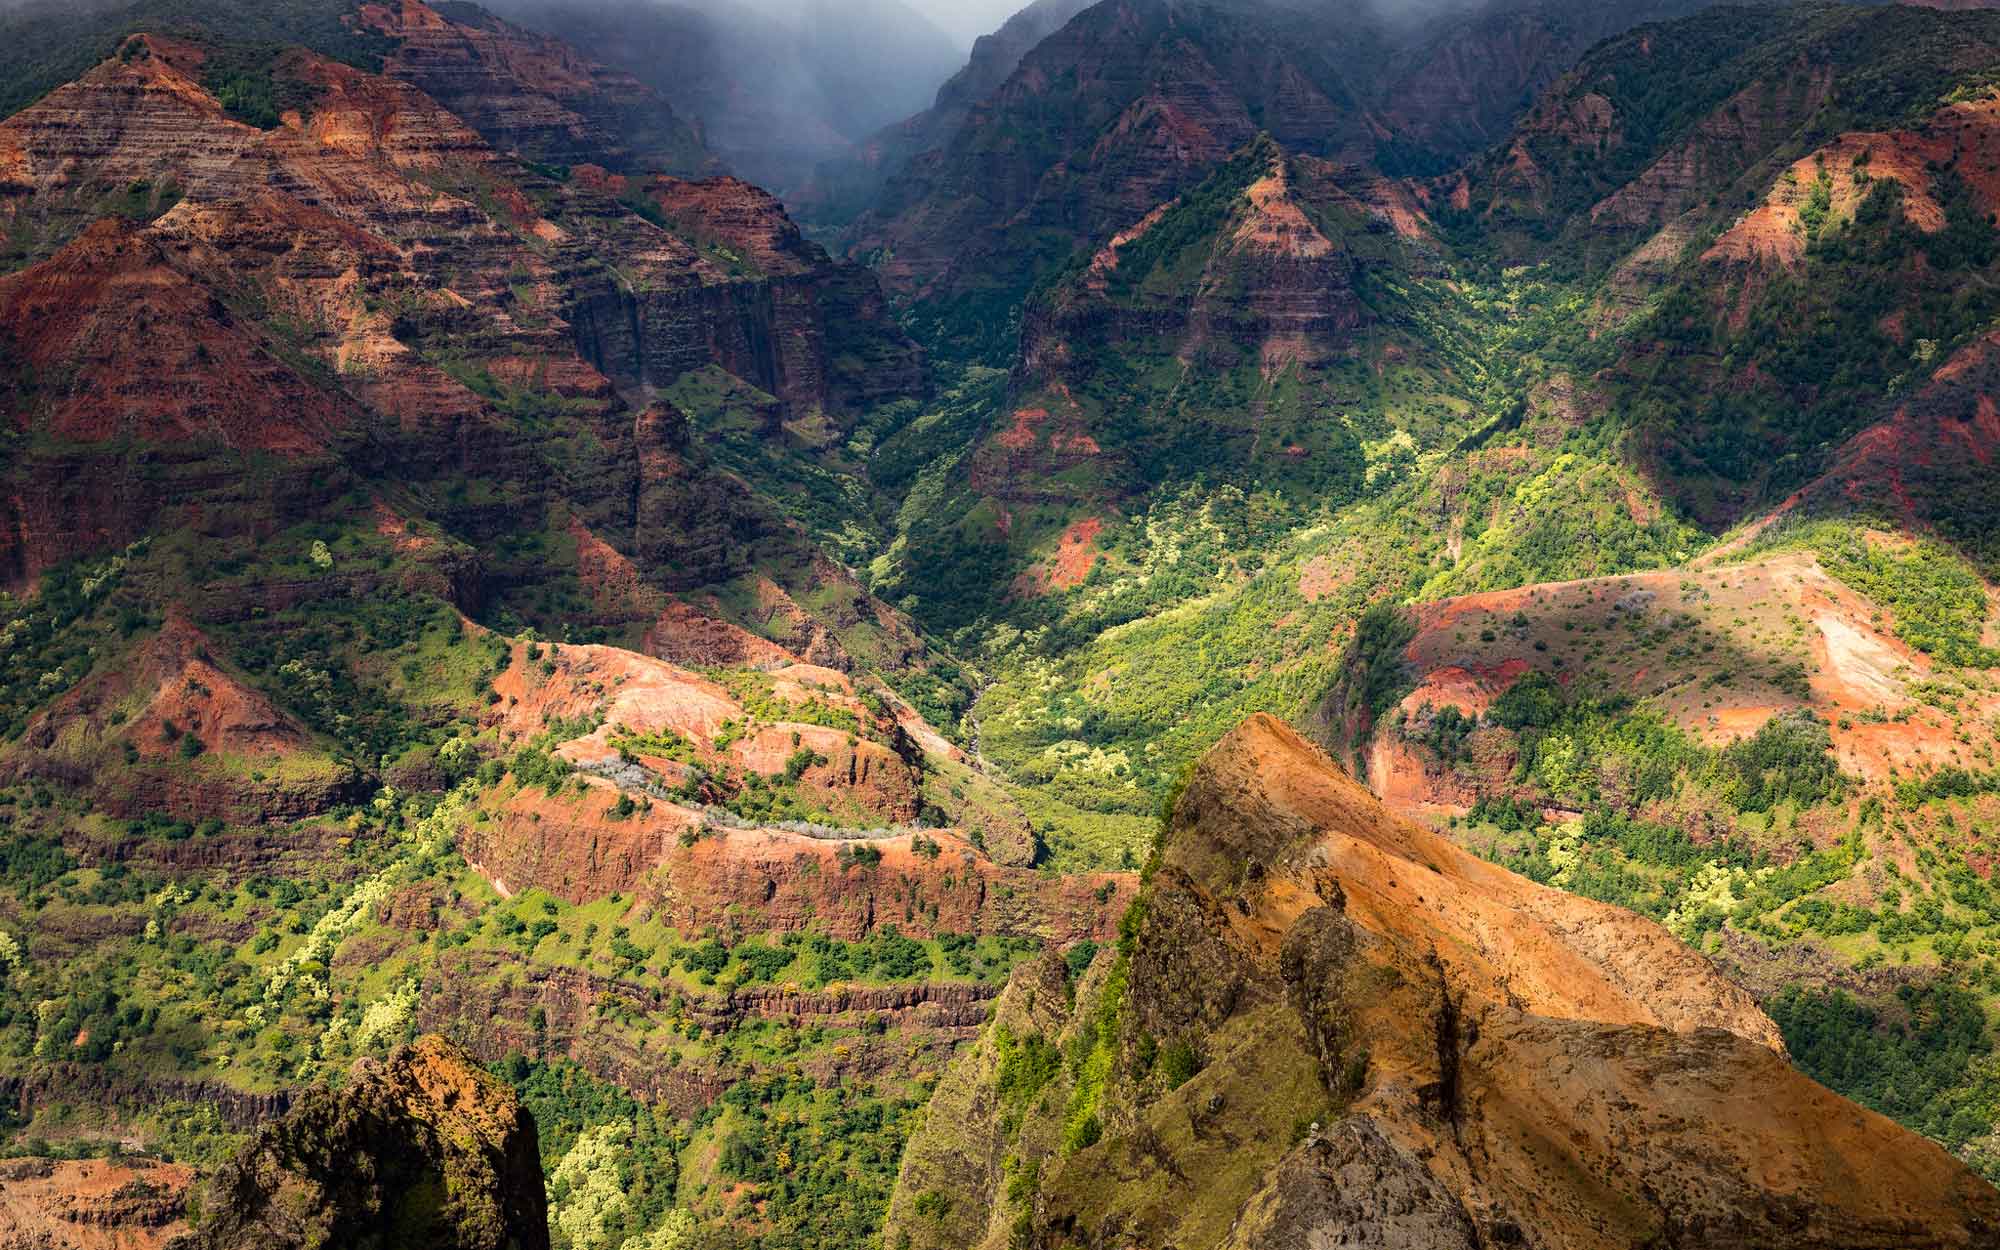 Photograph of the landscape at Waimea Canyon, Hawaii.